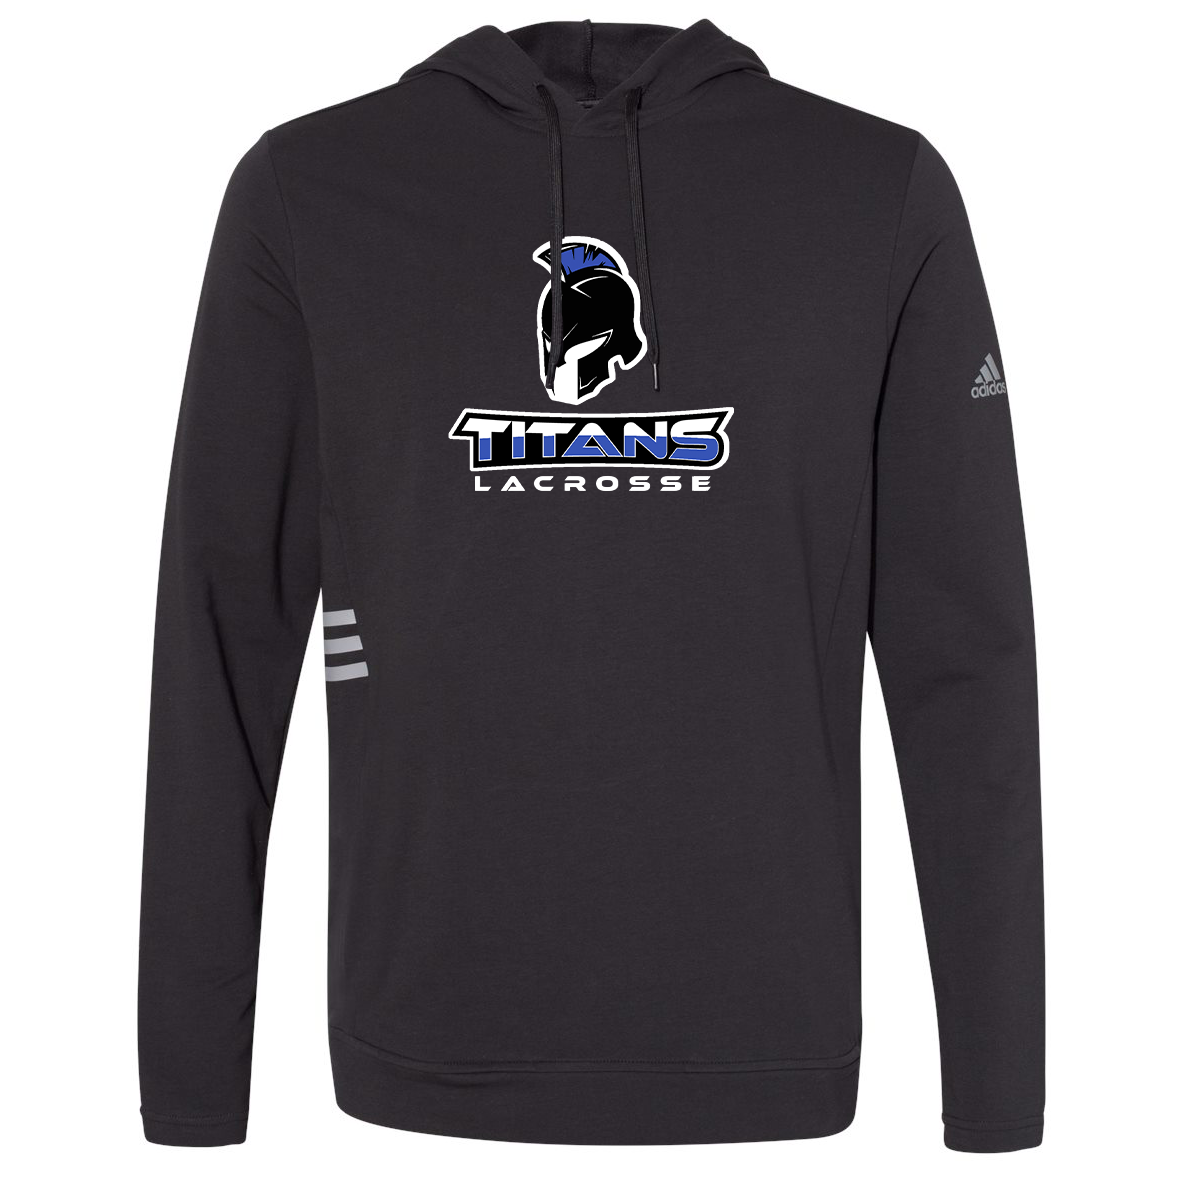 Southwest Titans Lacrosse Adidas Sweatshirt